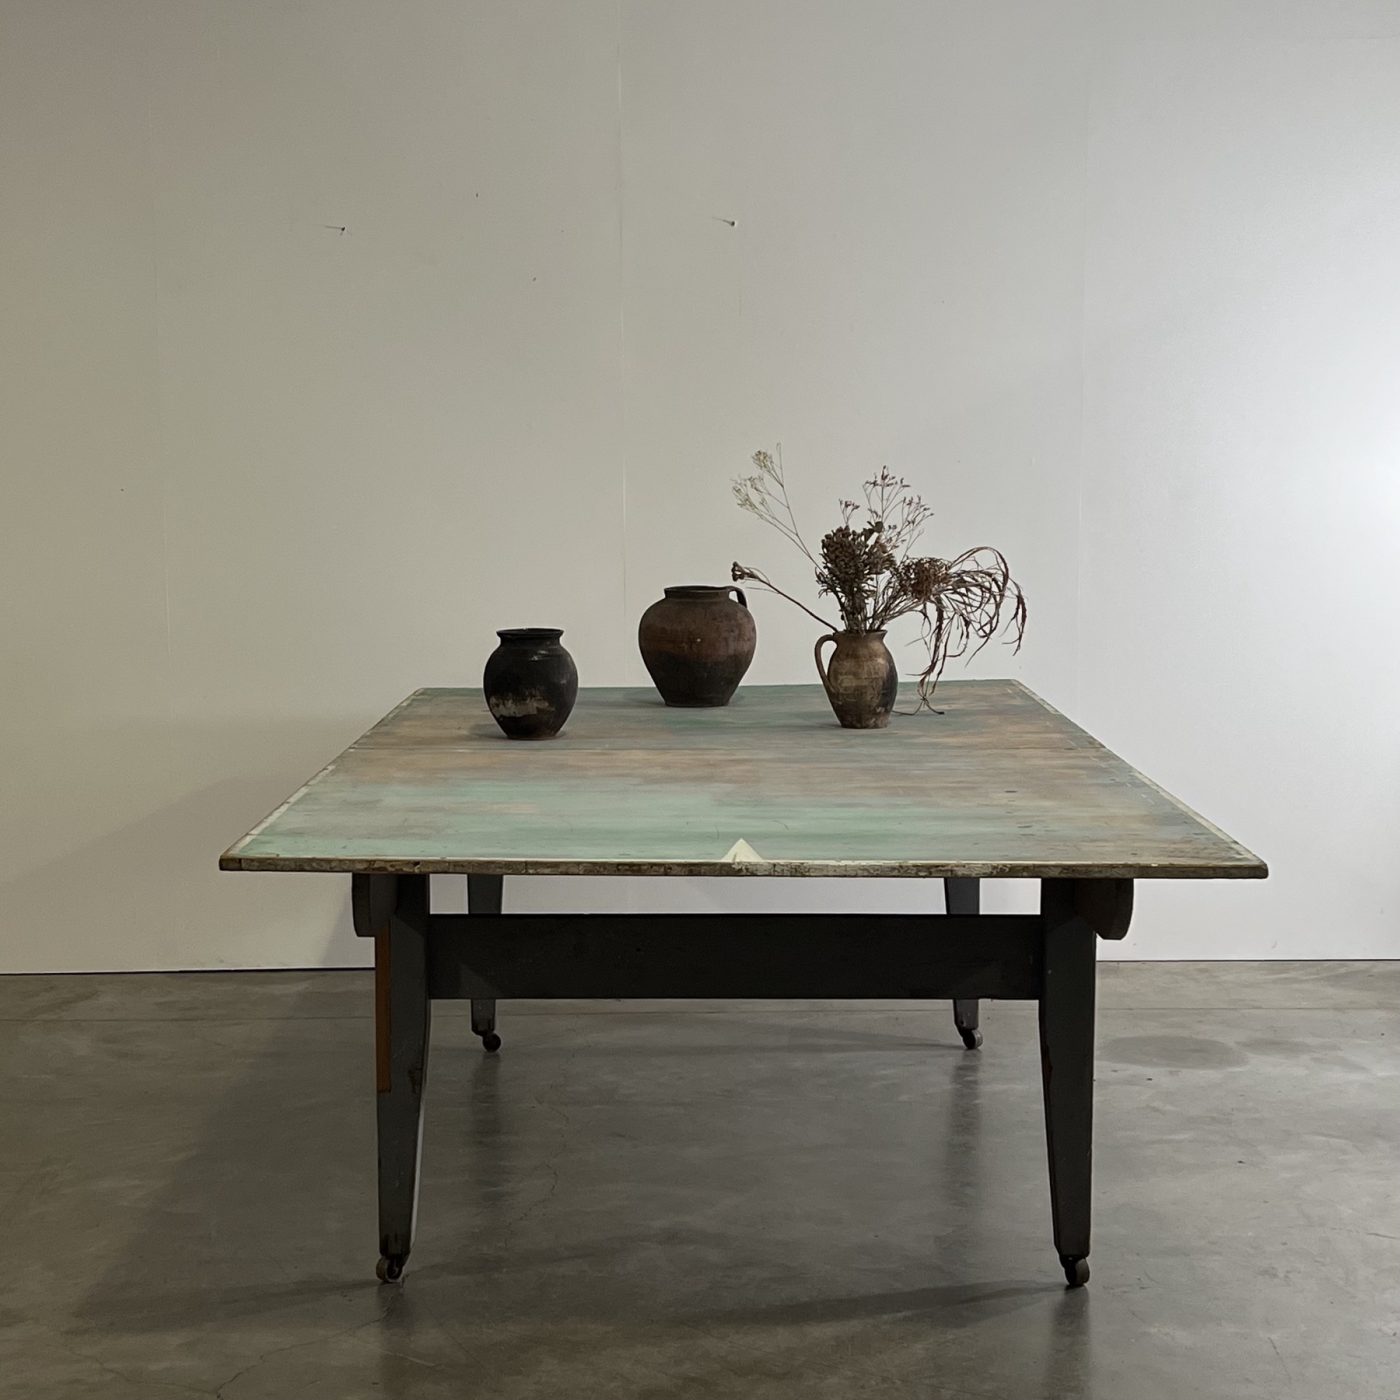 objet-vagabond-work-table0009